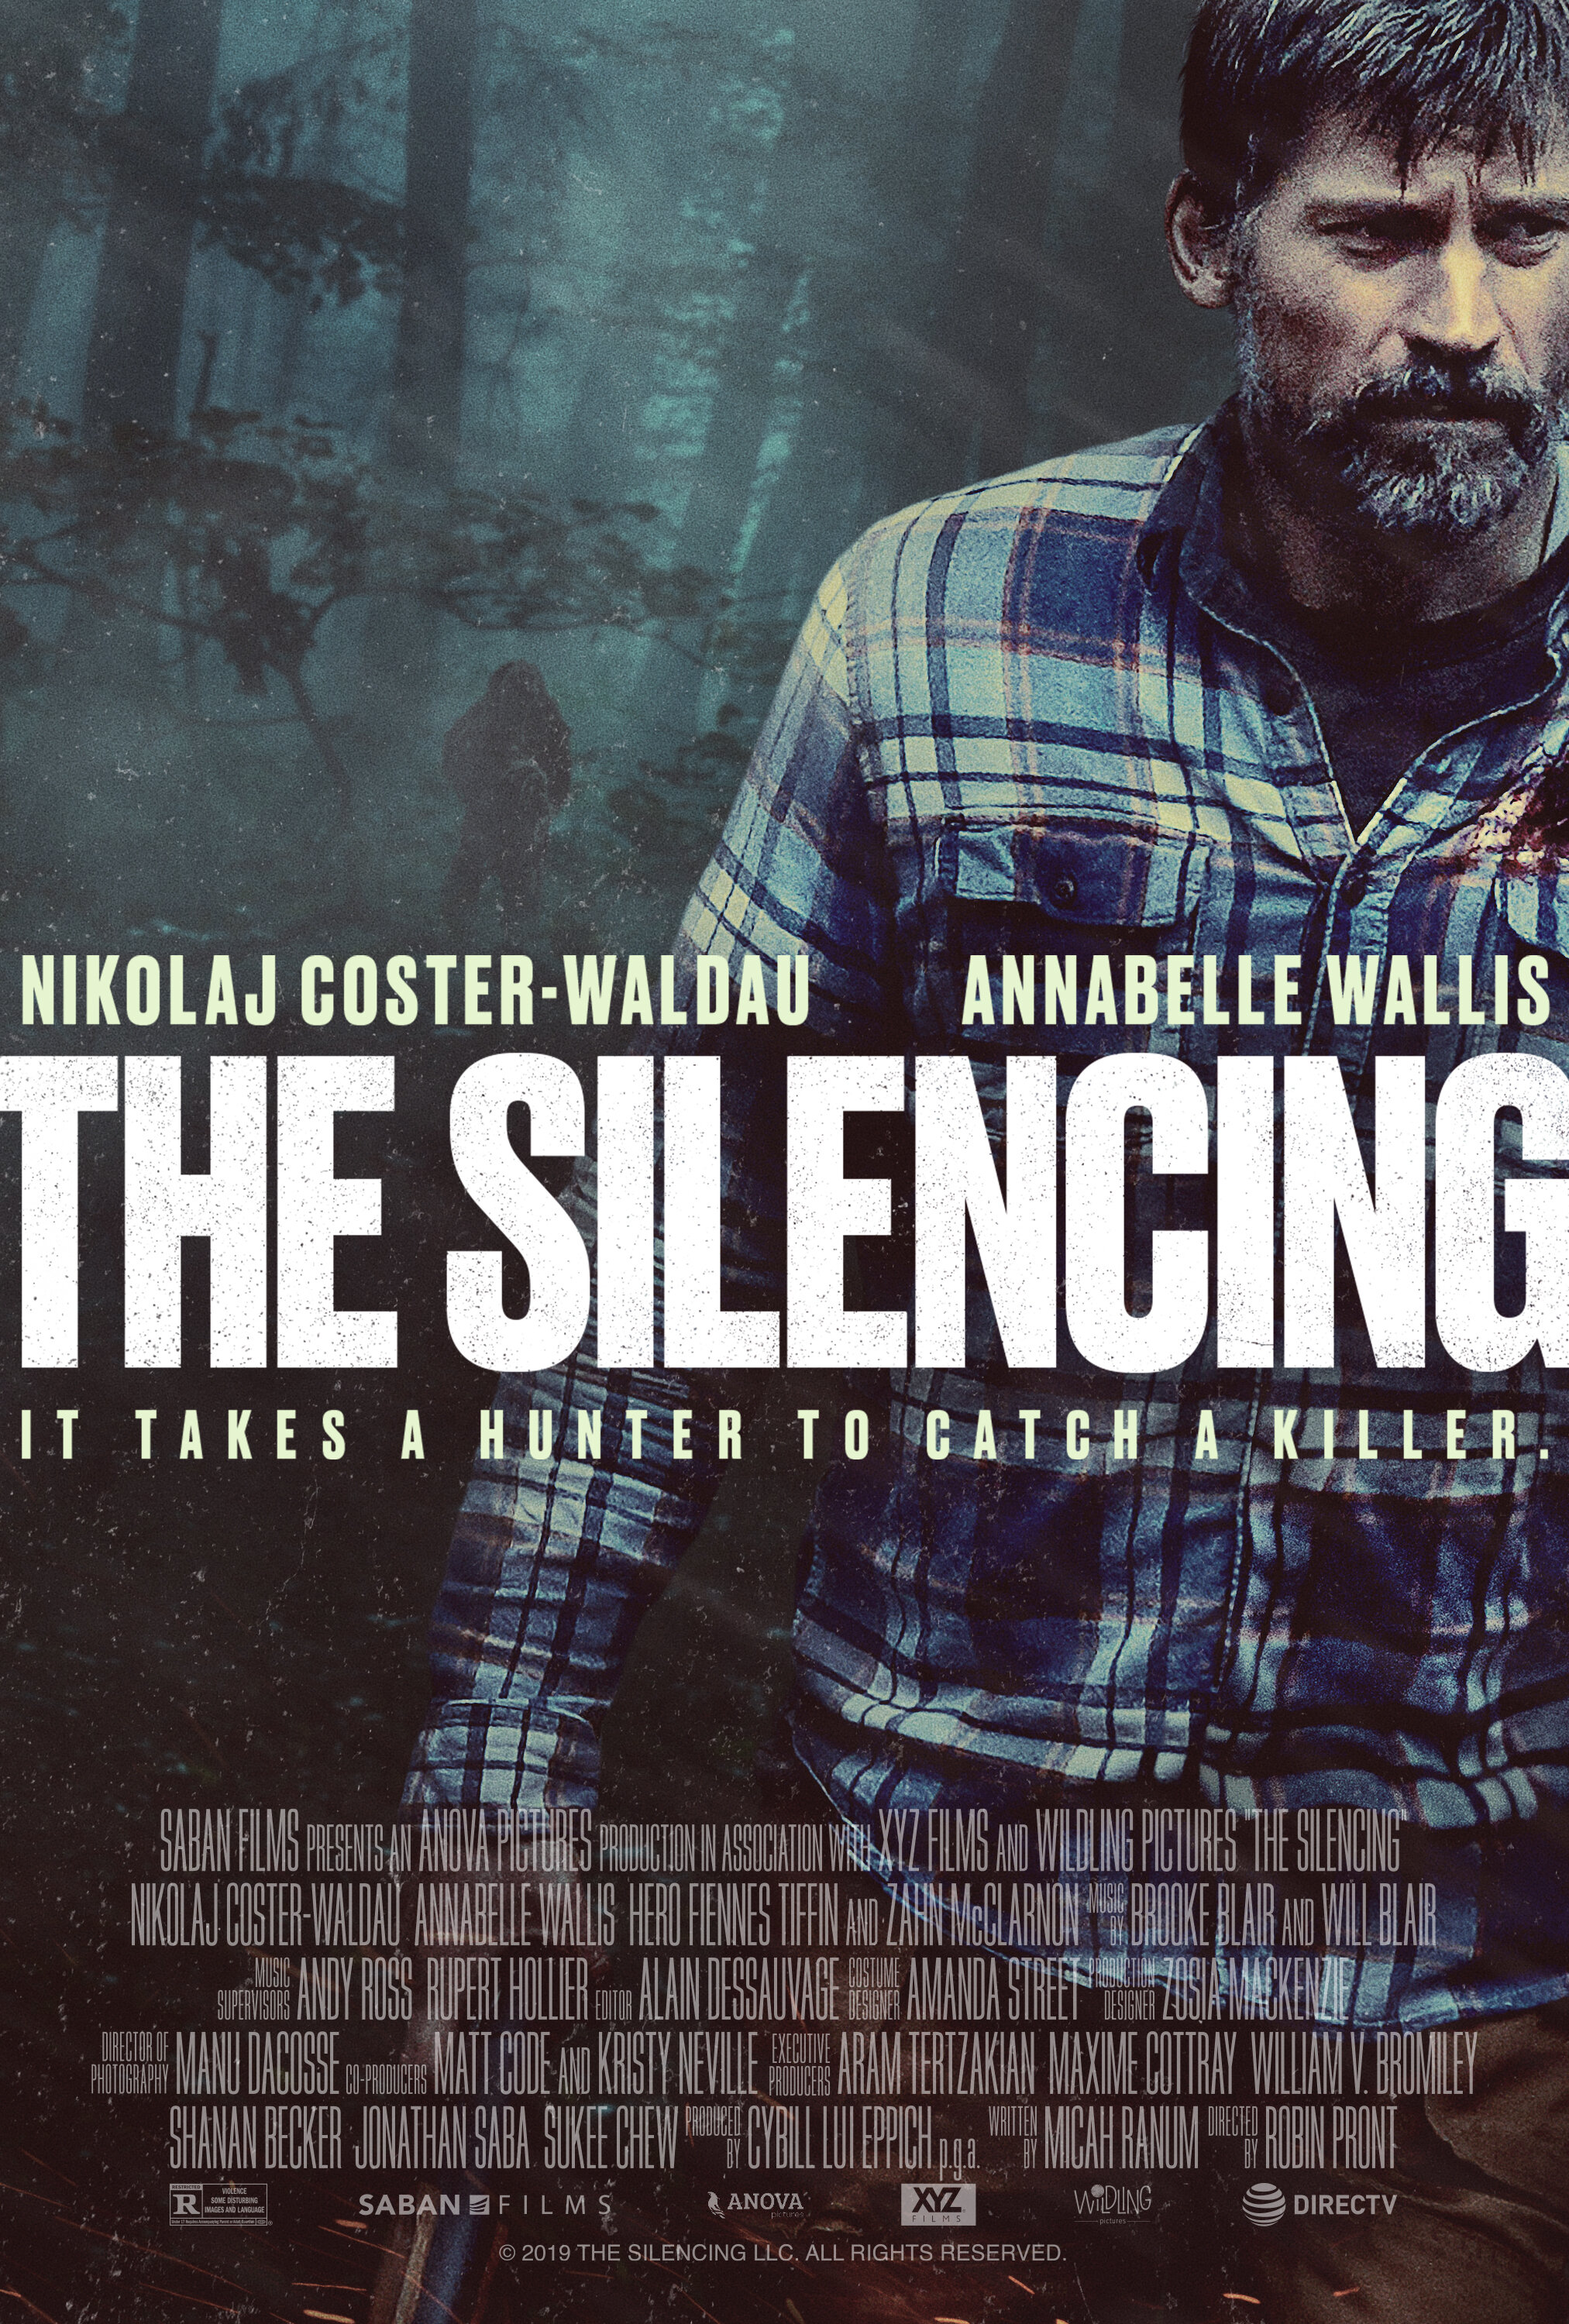 The Silencing.jpg